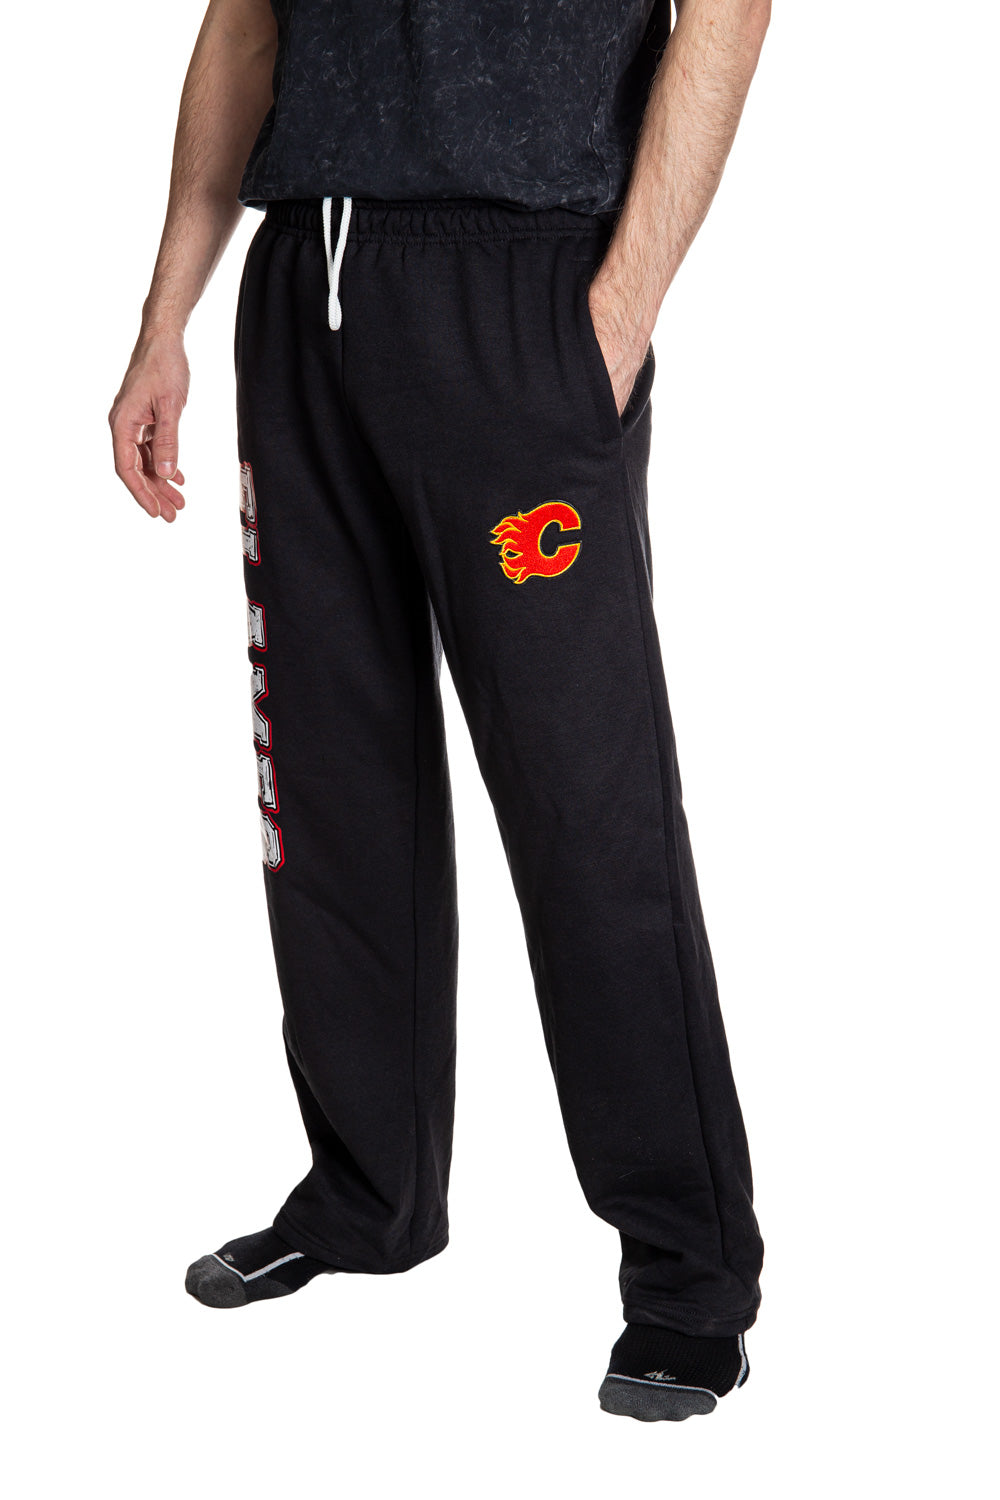 Calgary Flames Premium Fleece Sweatpants Side View of Embroidered Logo.